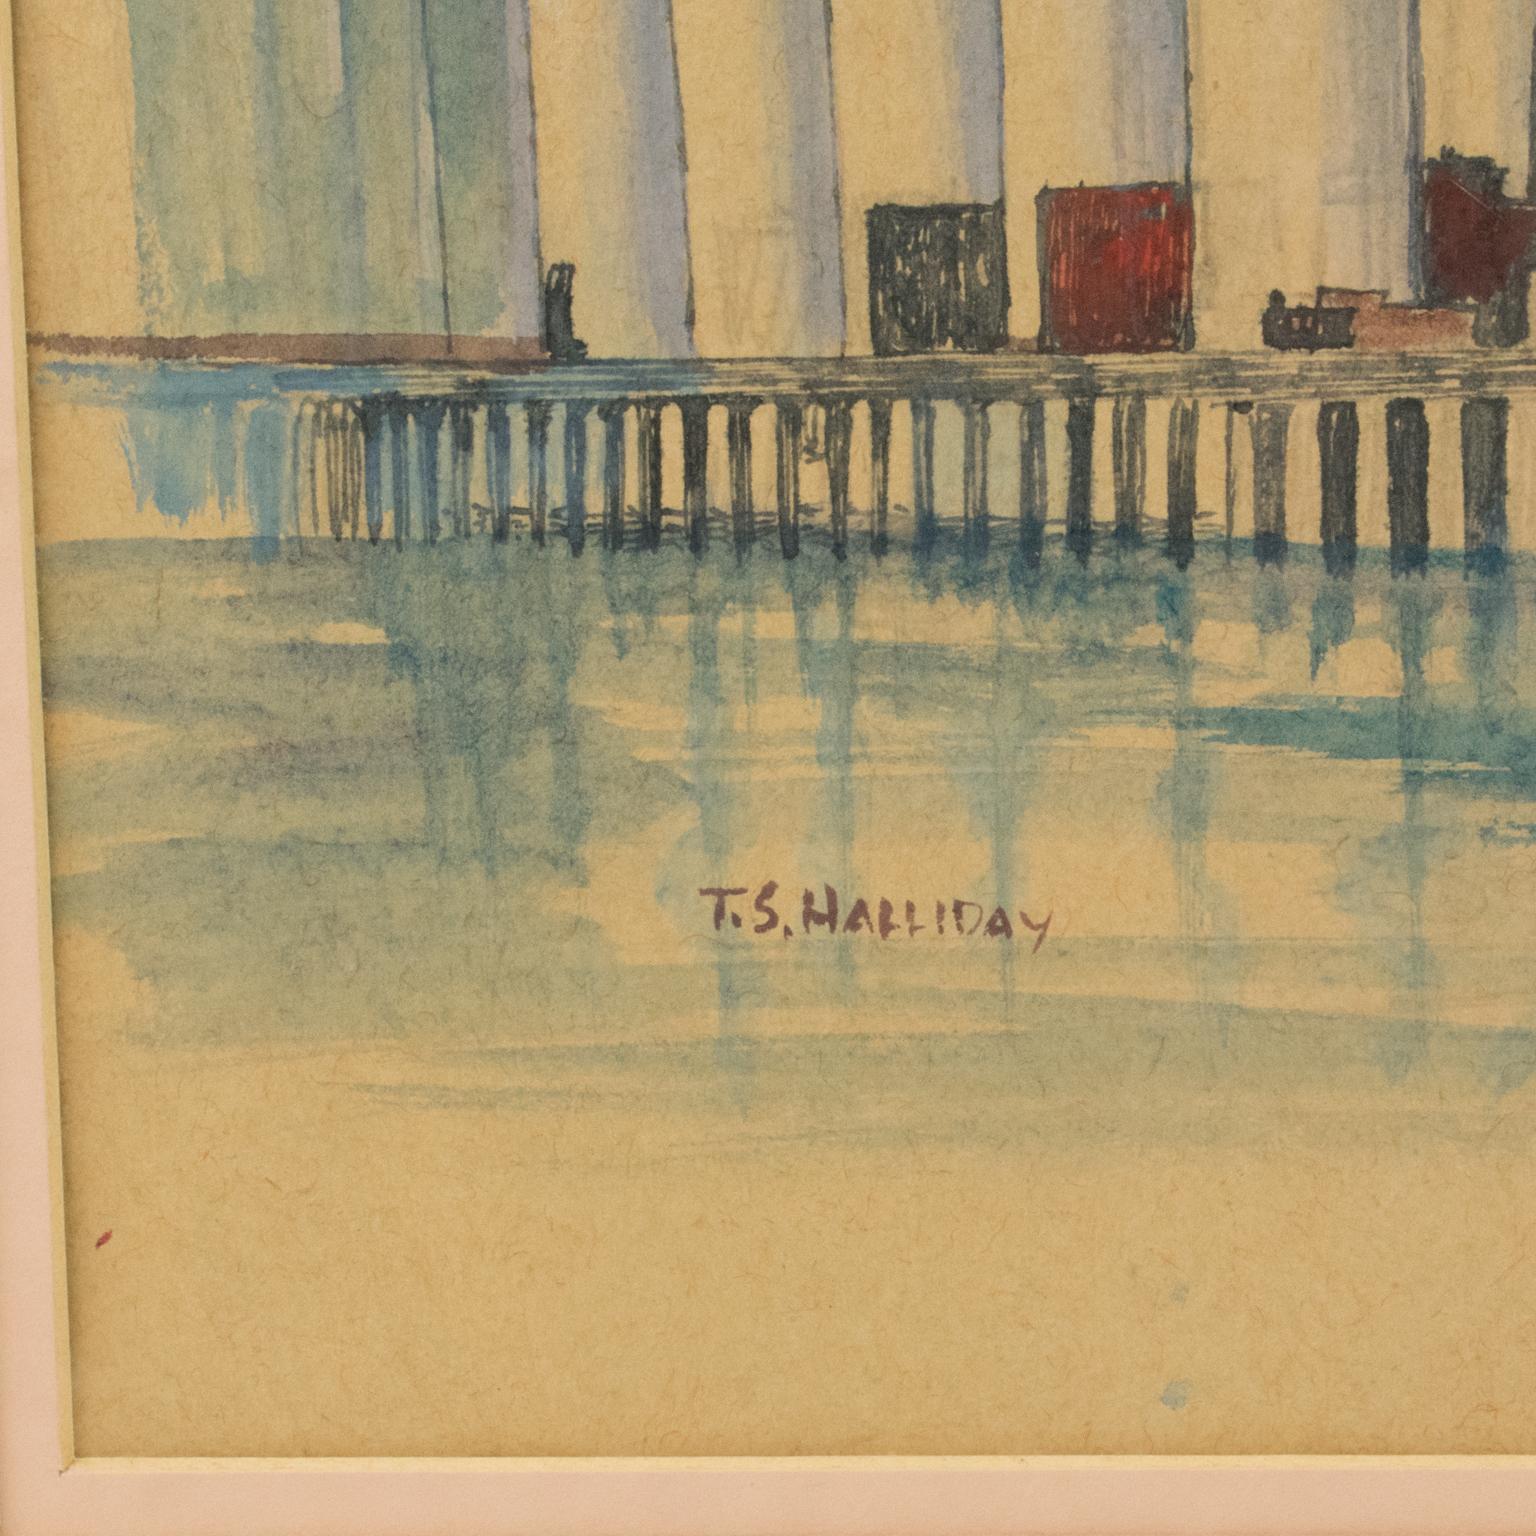 Industrielle Brückenkonstruktion, Meereslandschaft, Pastellgemälde von Thomas S. Halliday (Akademisch), Painting, von Thomas Symington Halliday